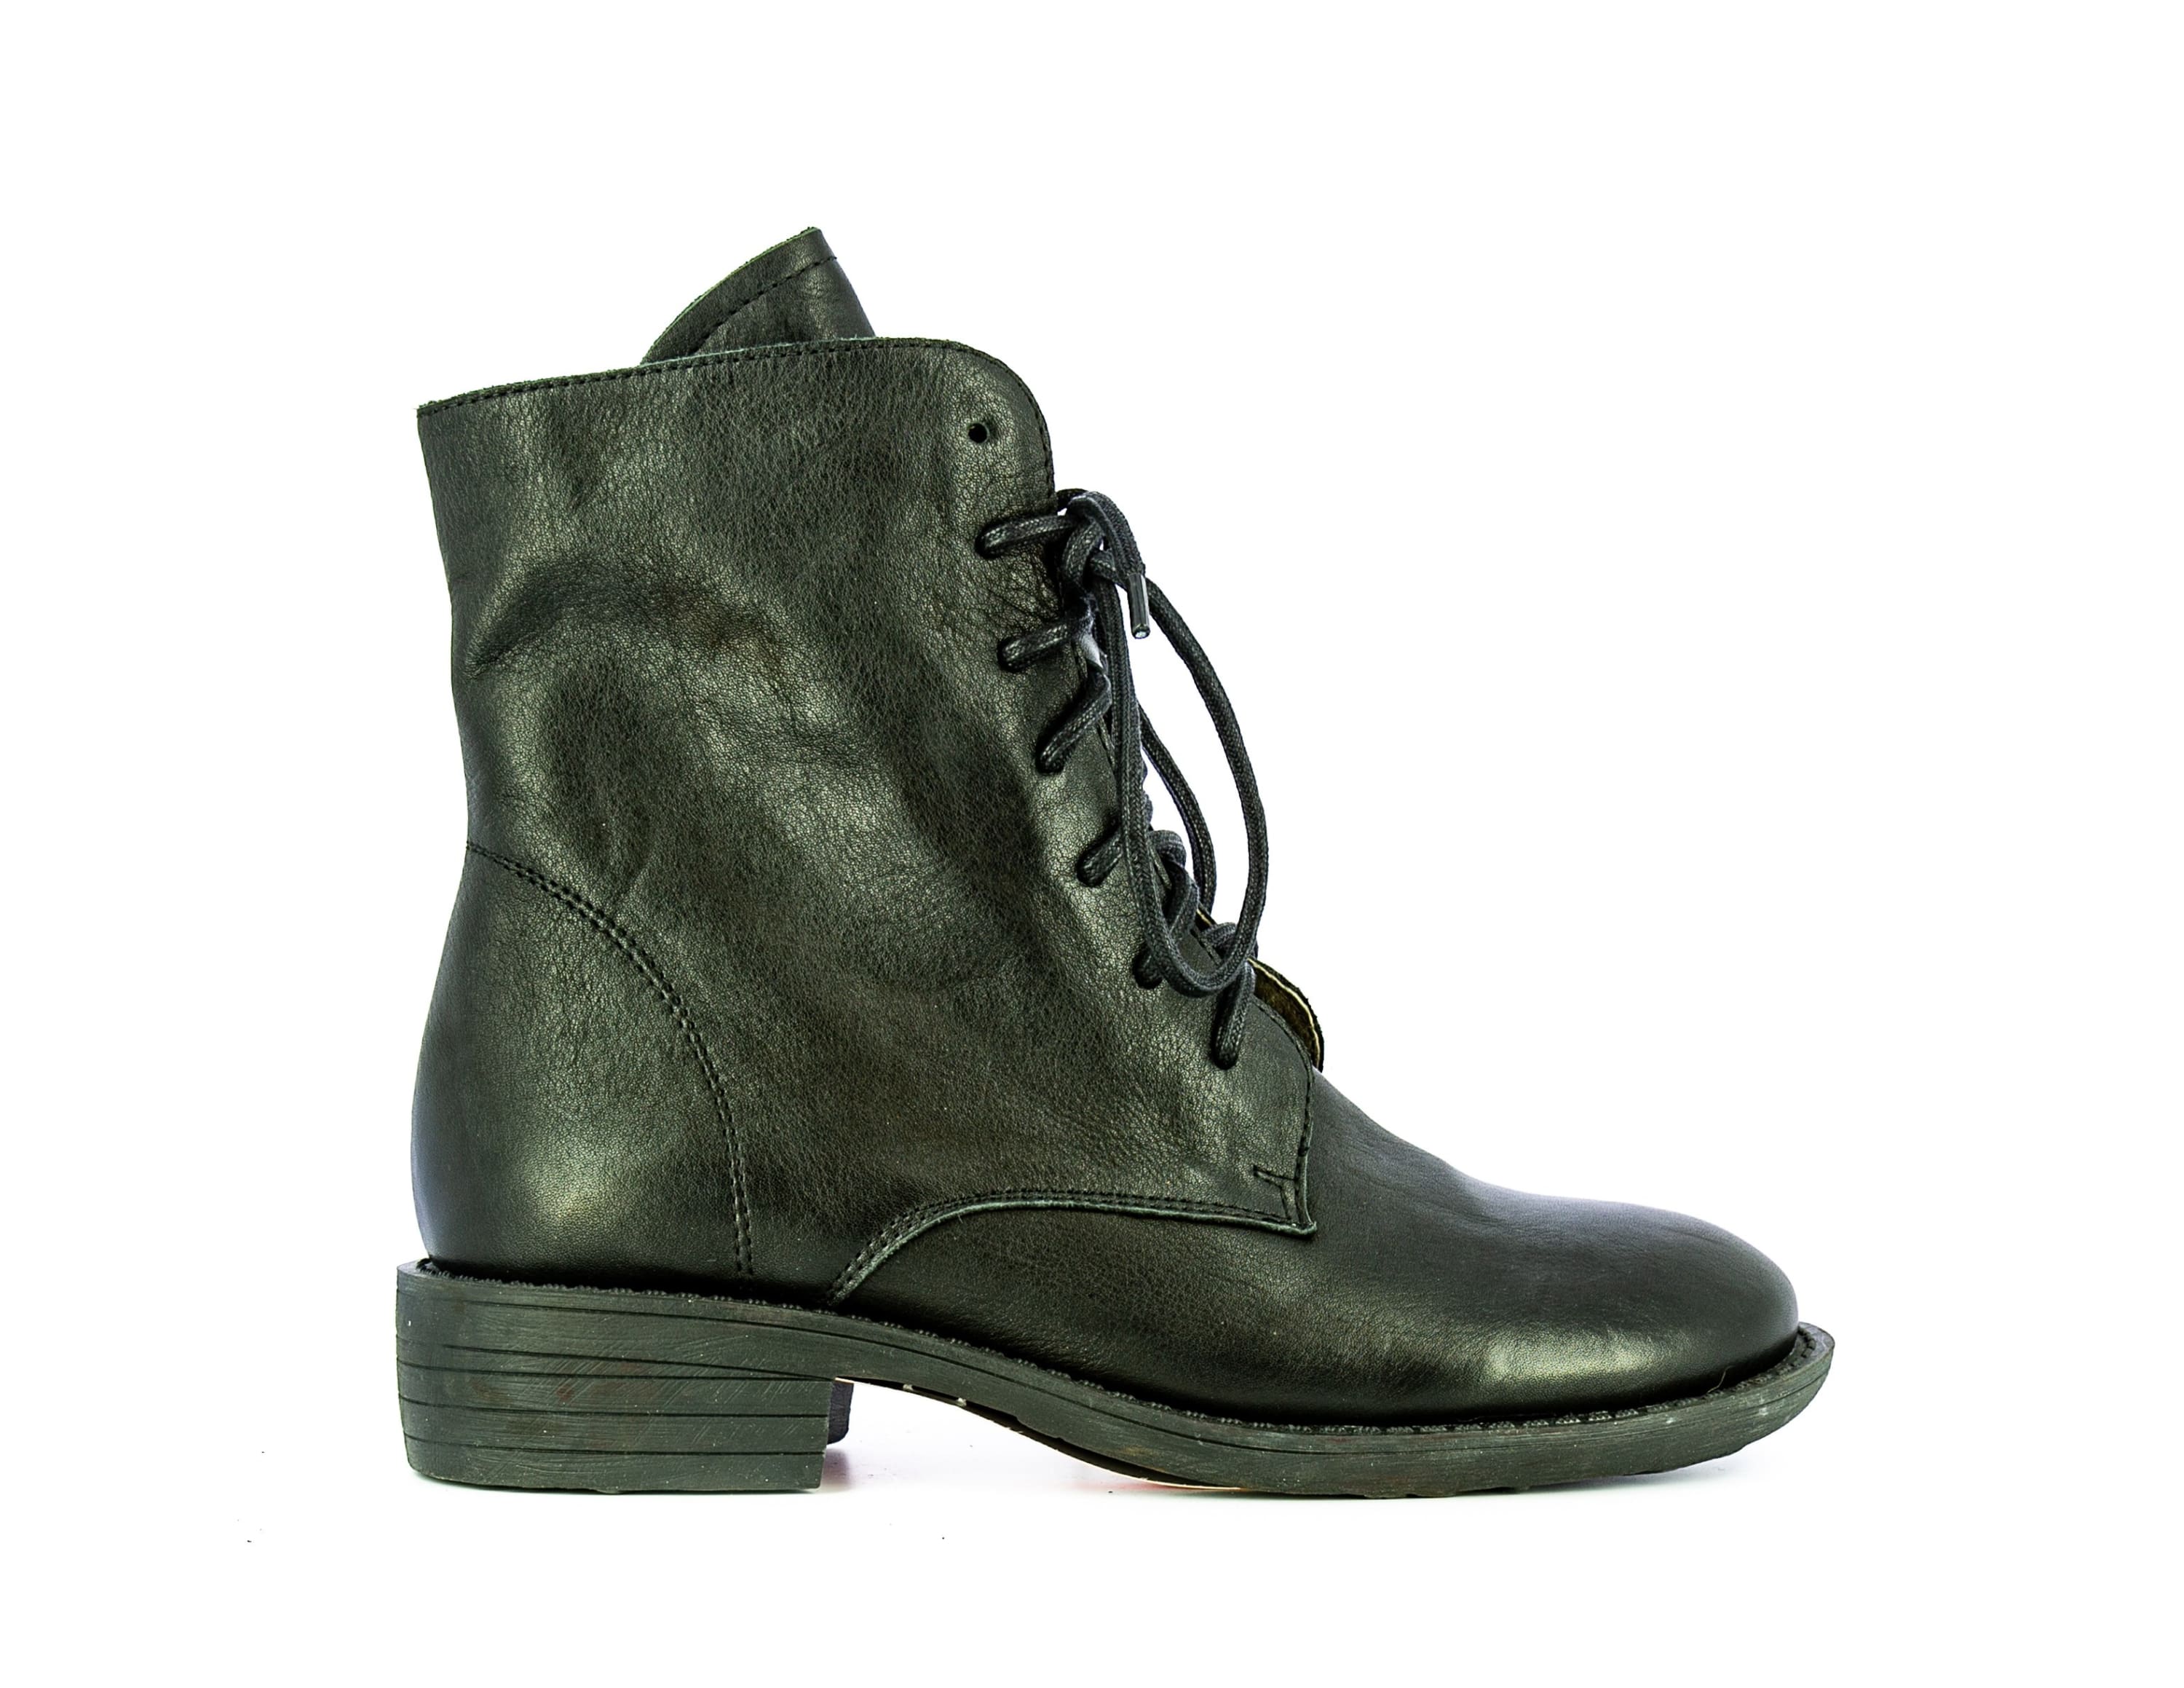 IDCALIAO 11 - 35 / Black - Boots